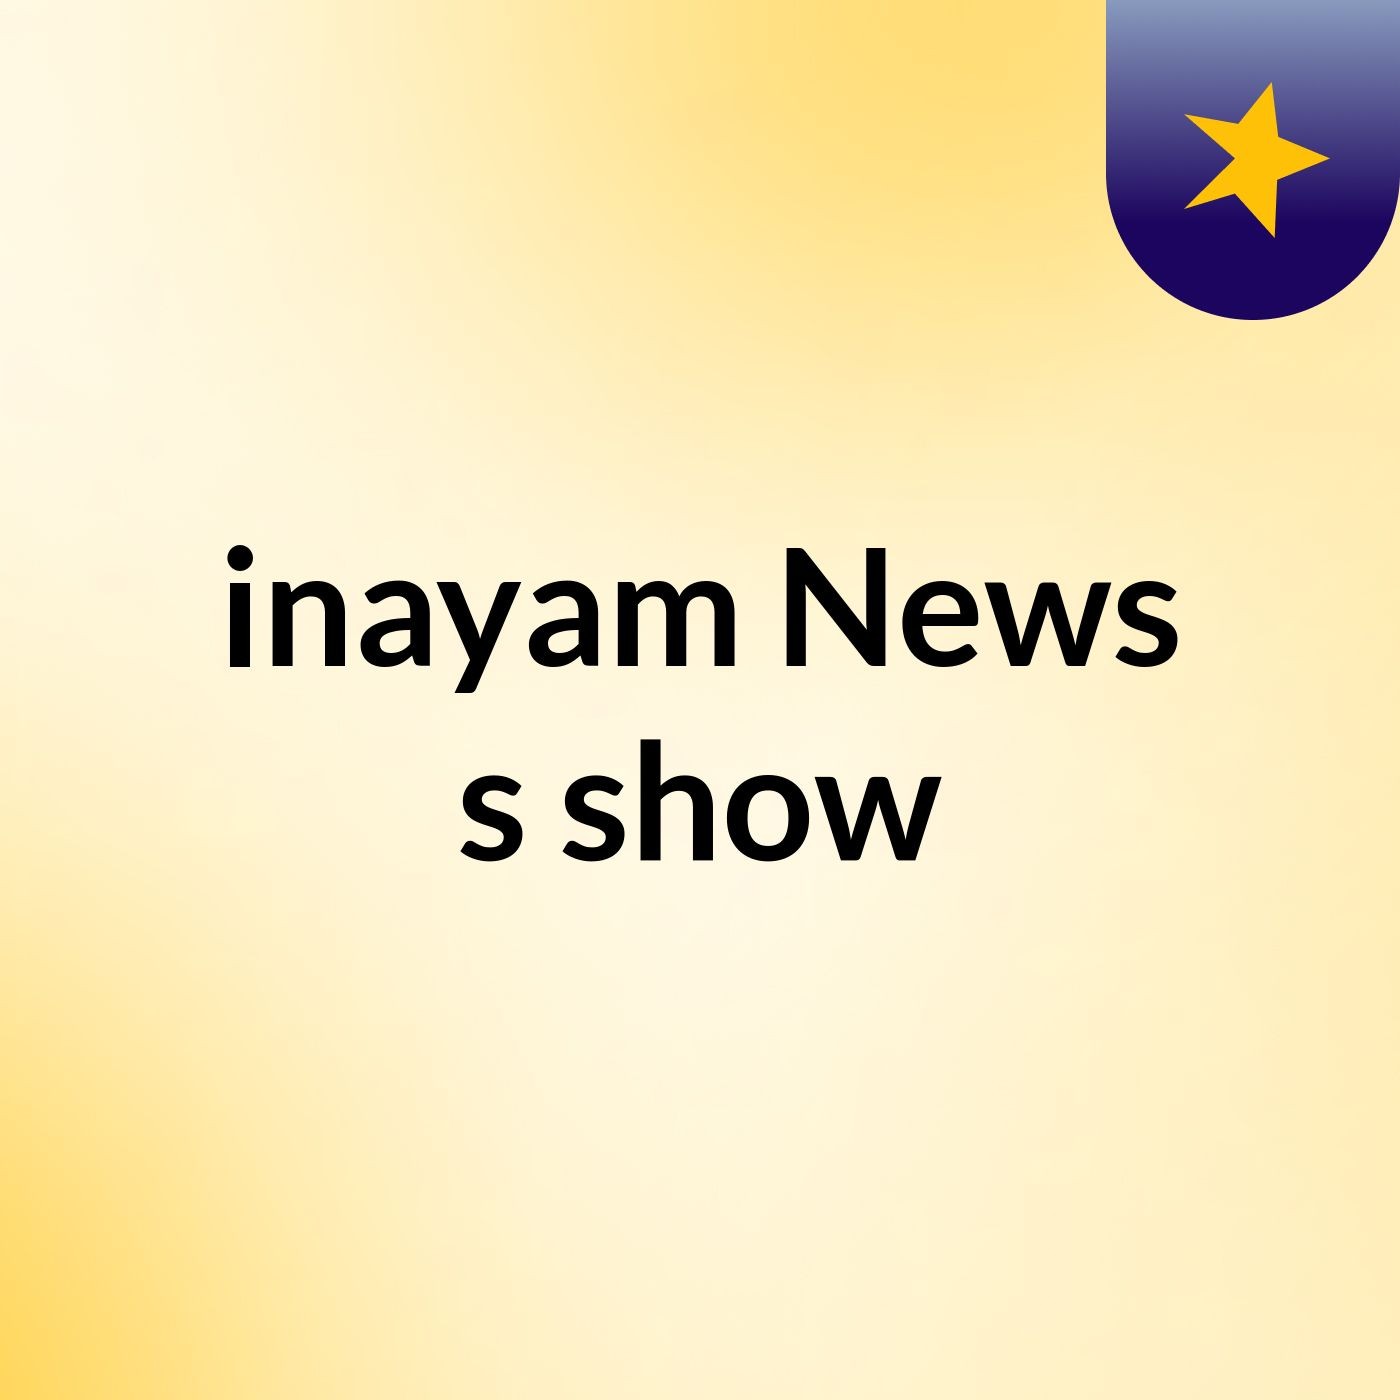 inayam News's show